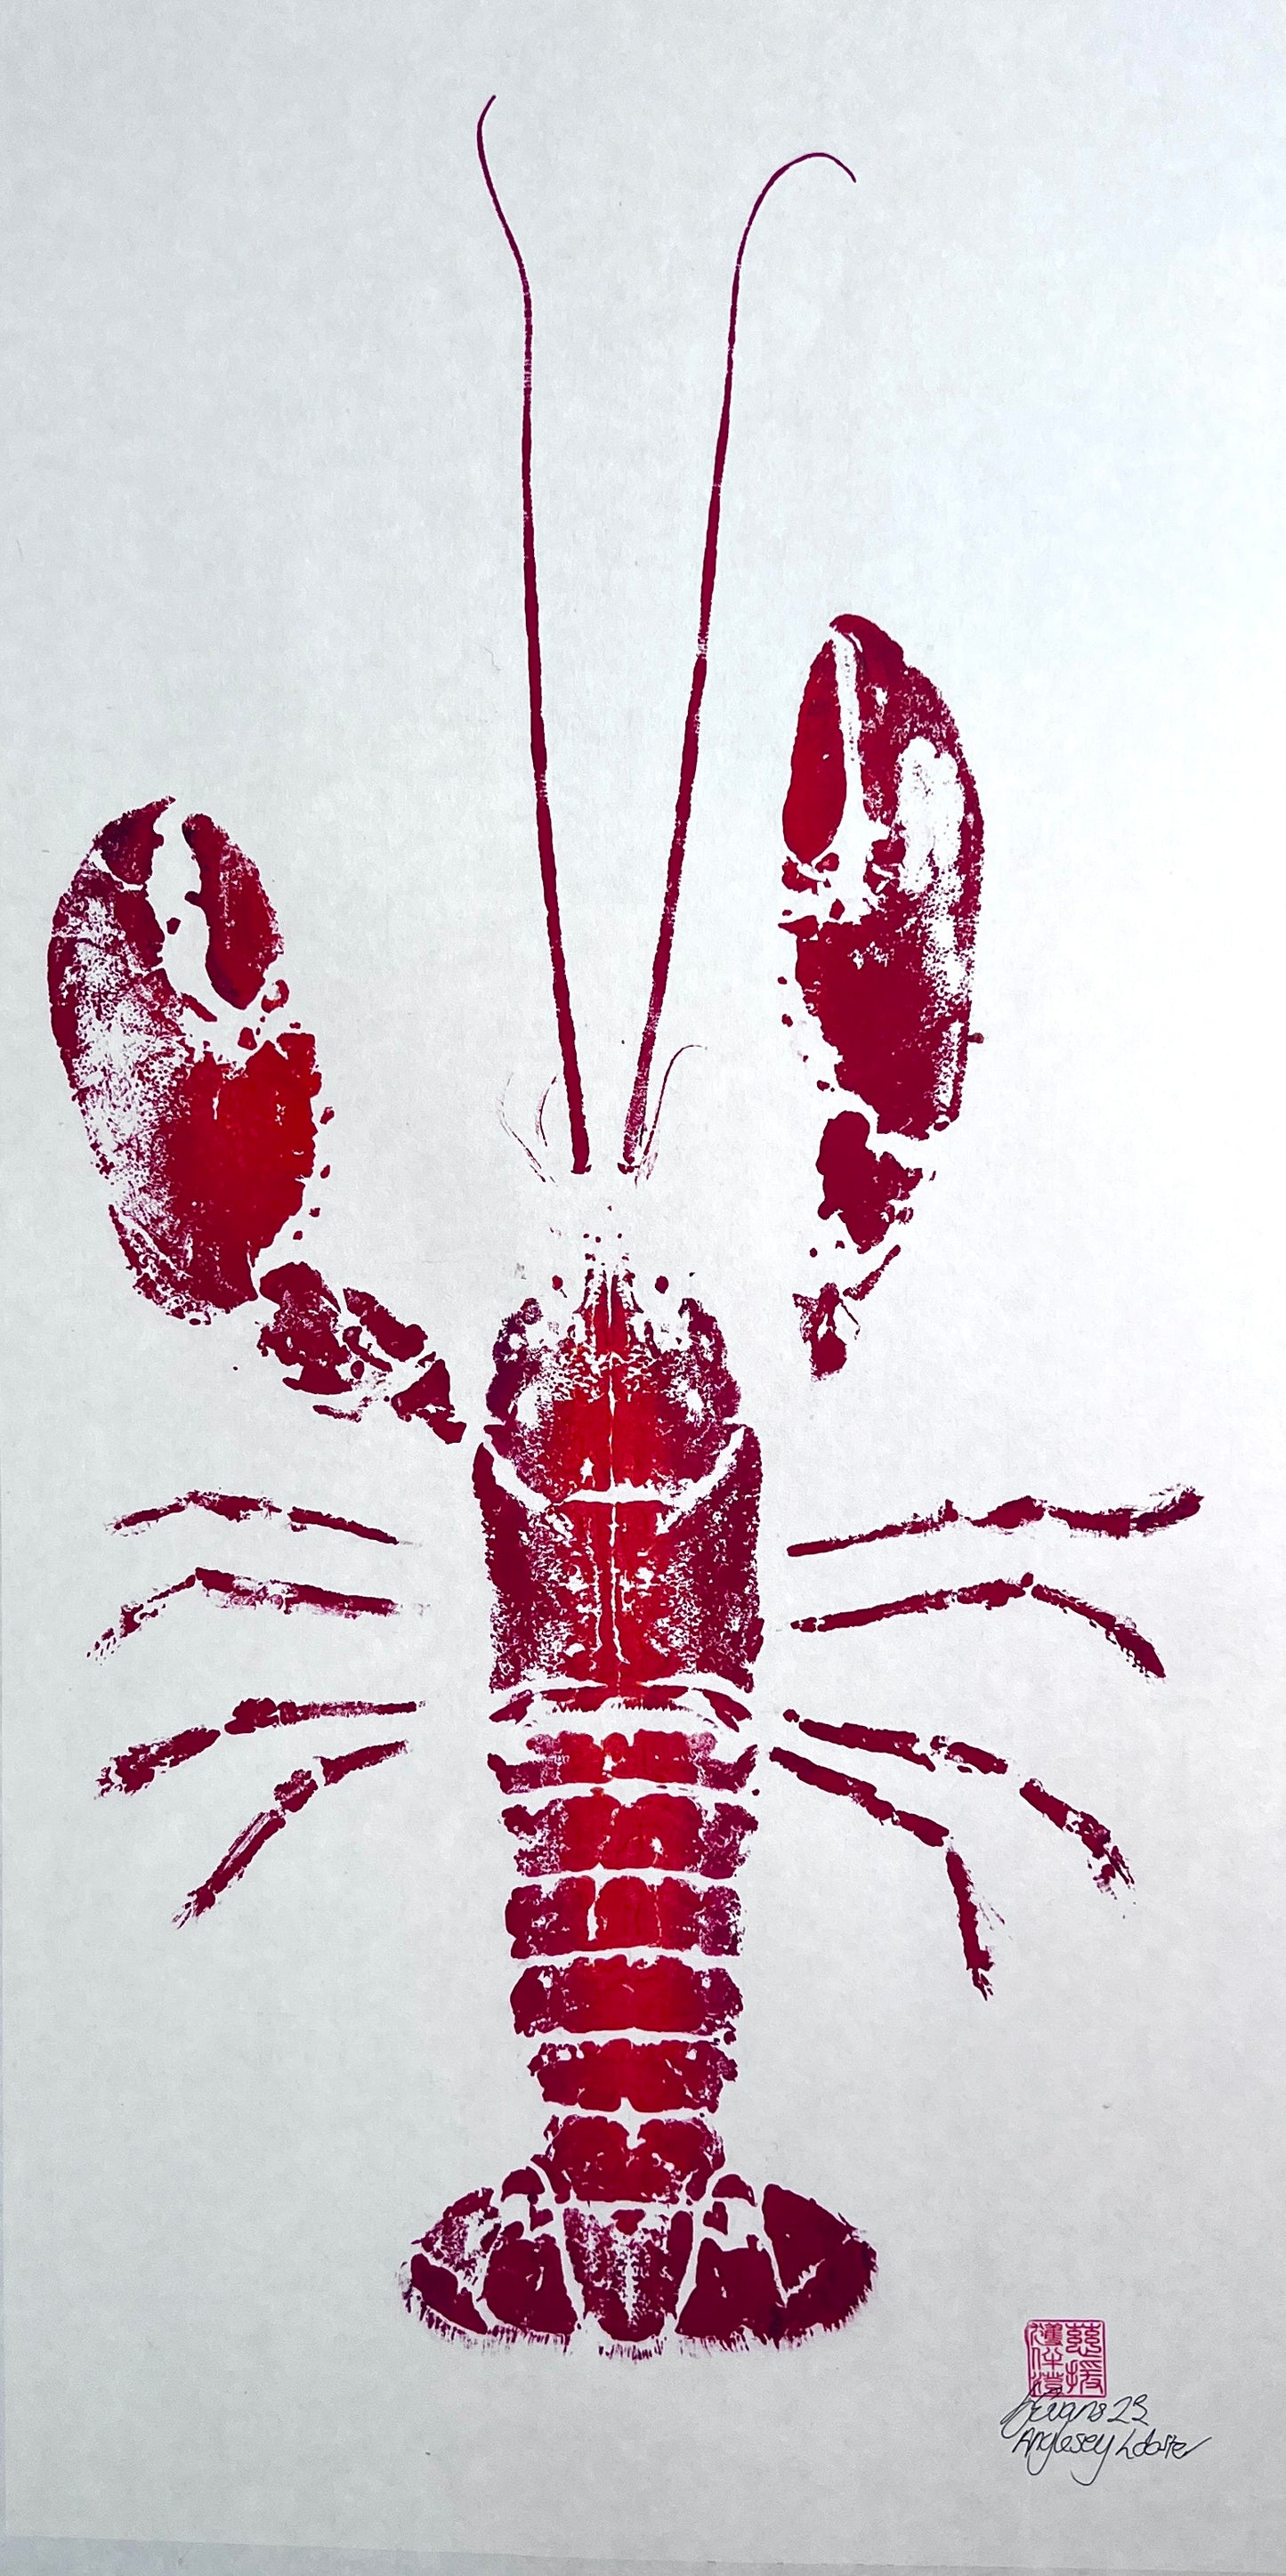 Menai Strait Lobster, Gyotaku Printed in Red ink